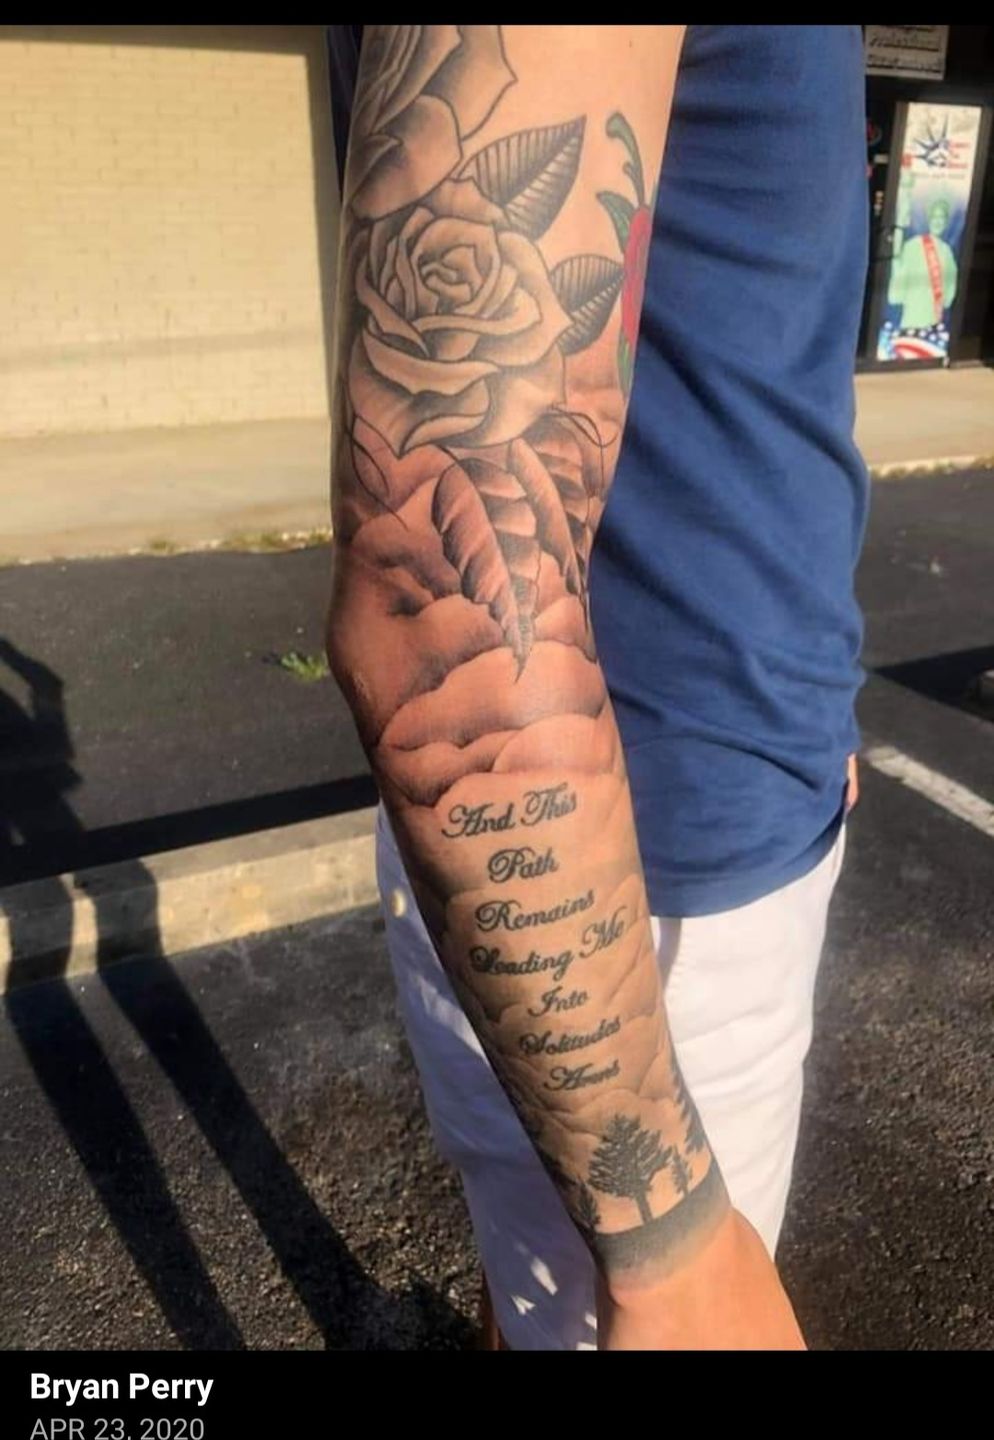 Arm tattoos